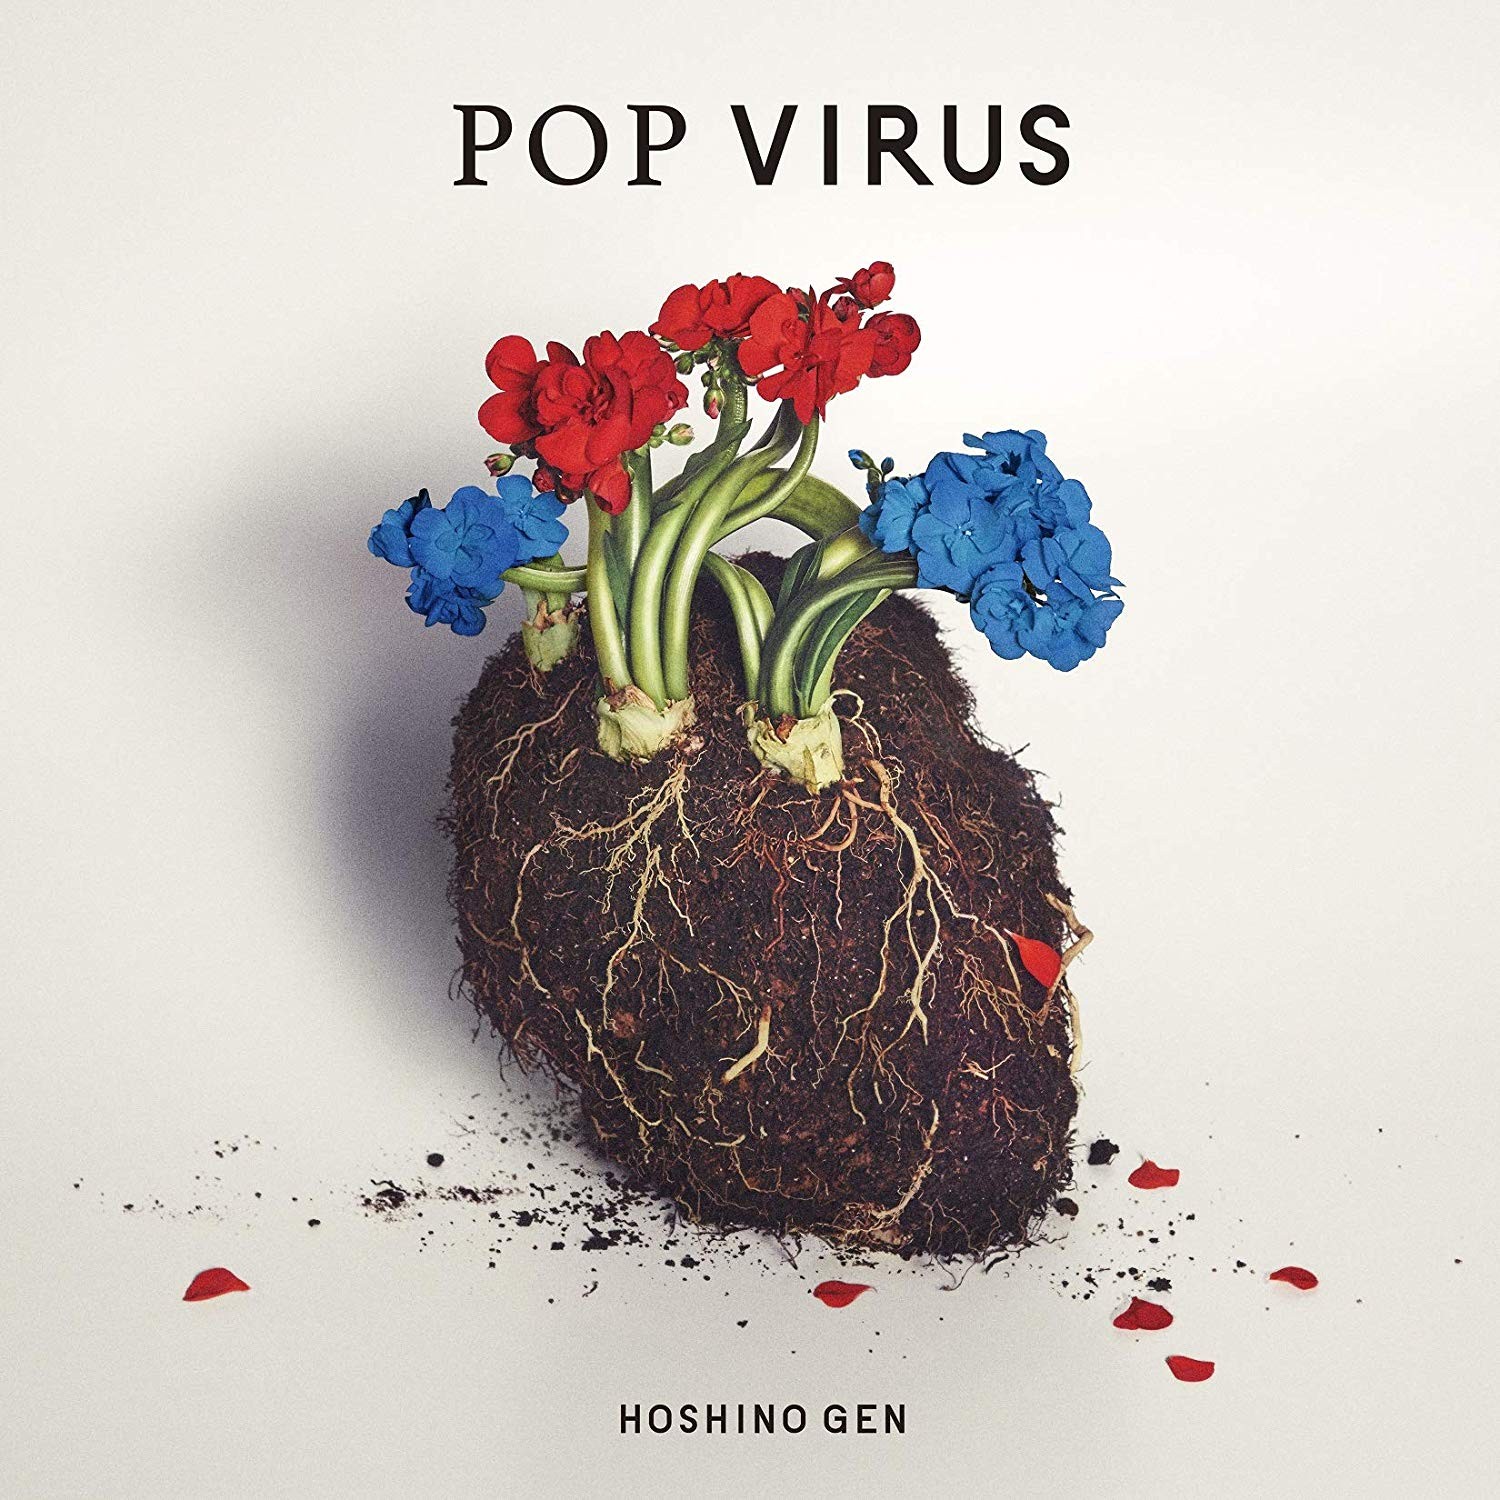 星野源 (Gen Hoshino) – Pop Virus [FLAC + MP3 320 / CD] [2018.12.19]